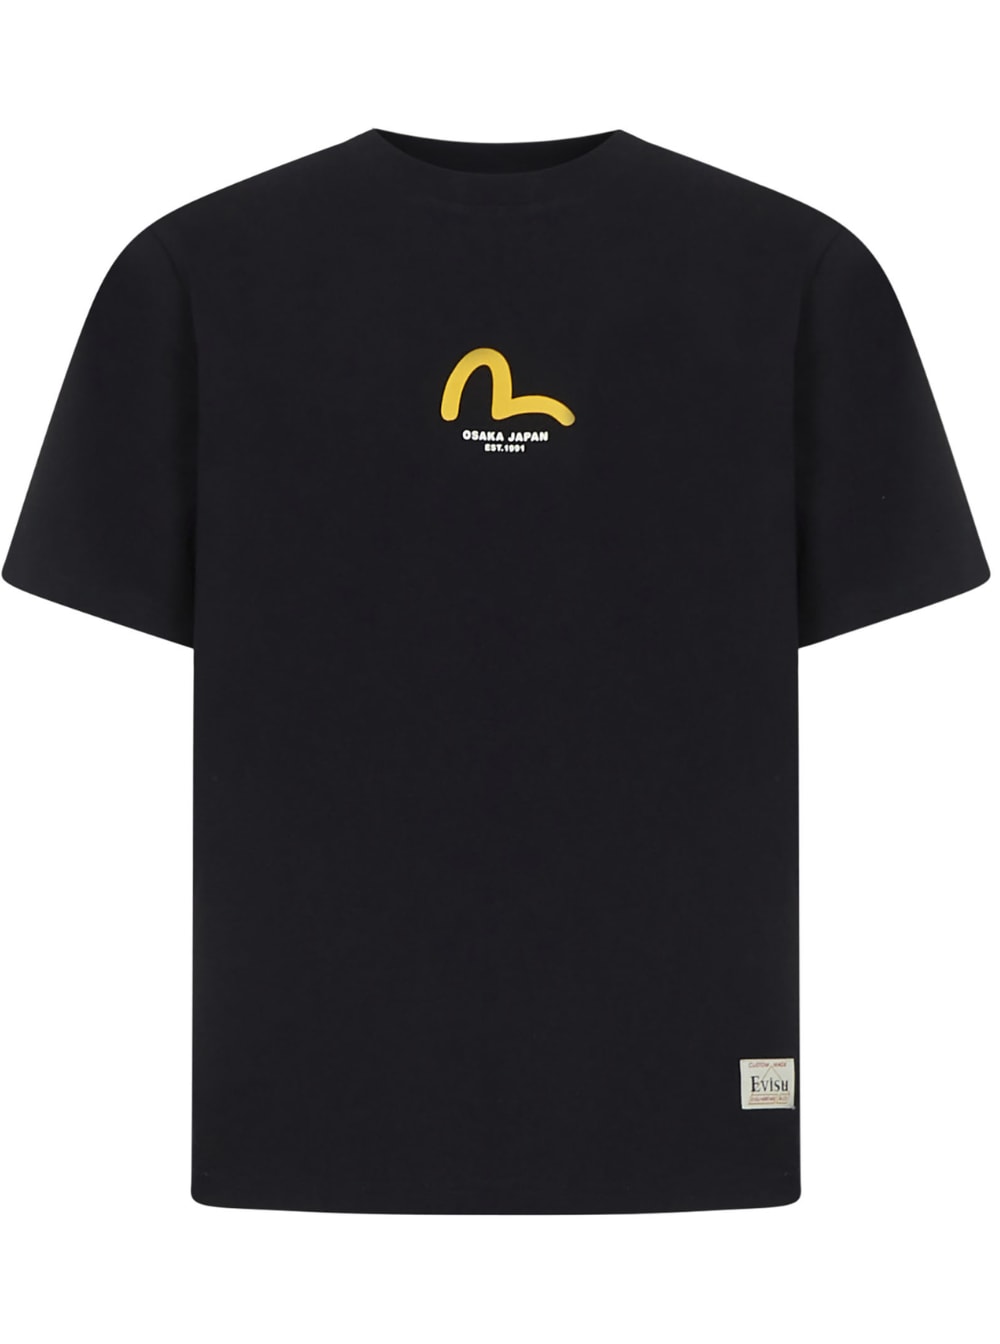 Evisu Mans Black Cotton T-shirt With Daruma Komainu Logo Print